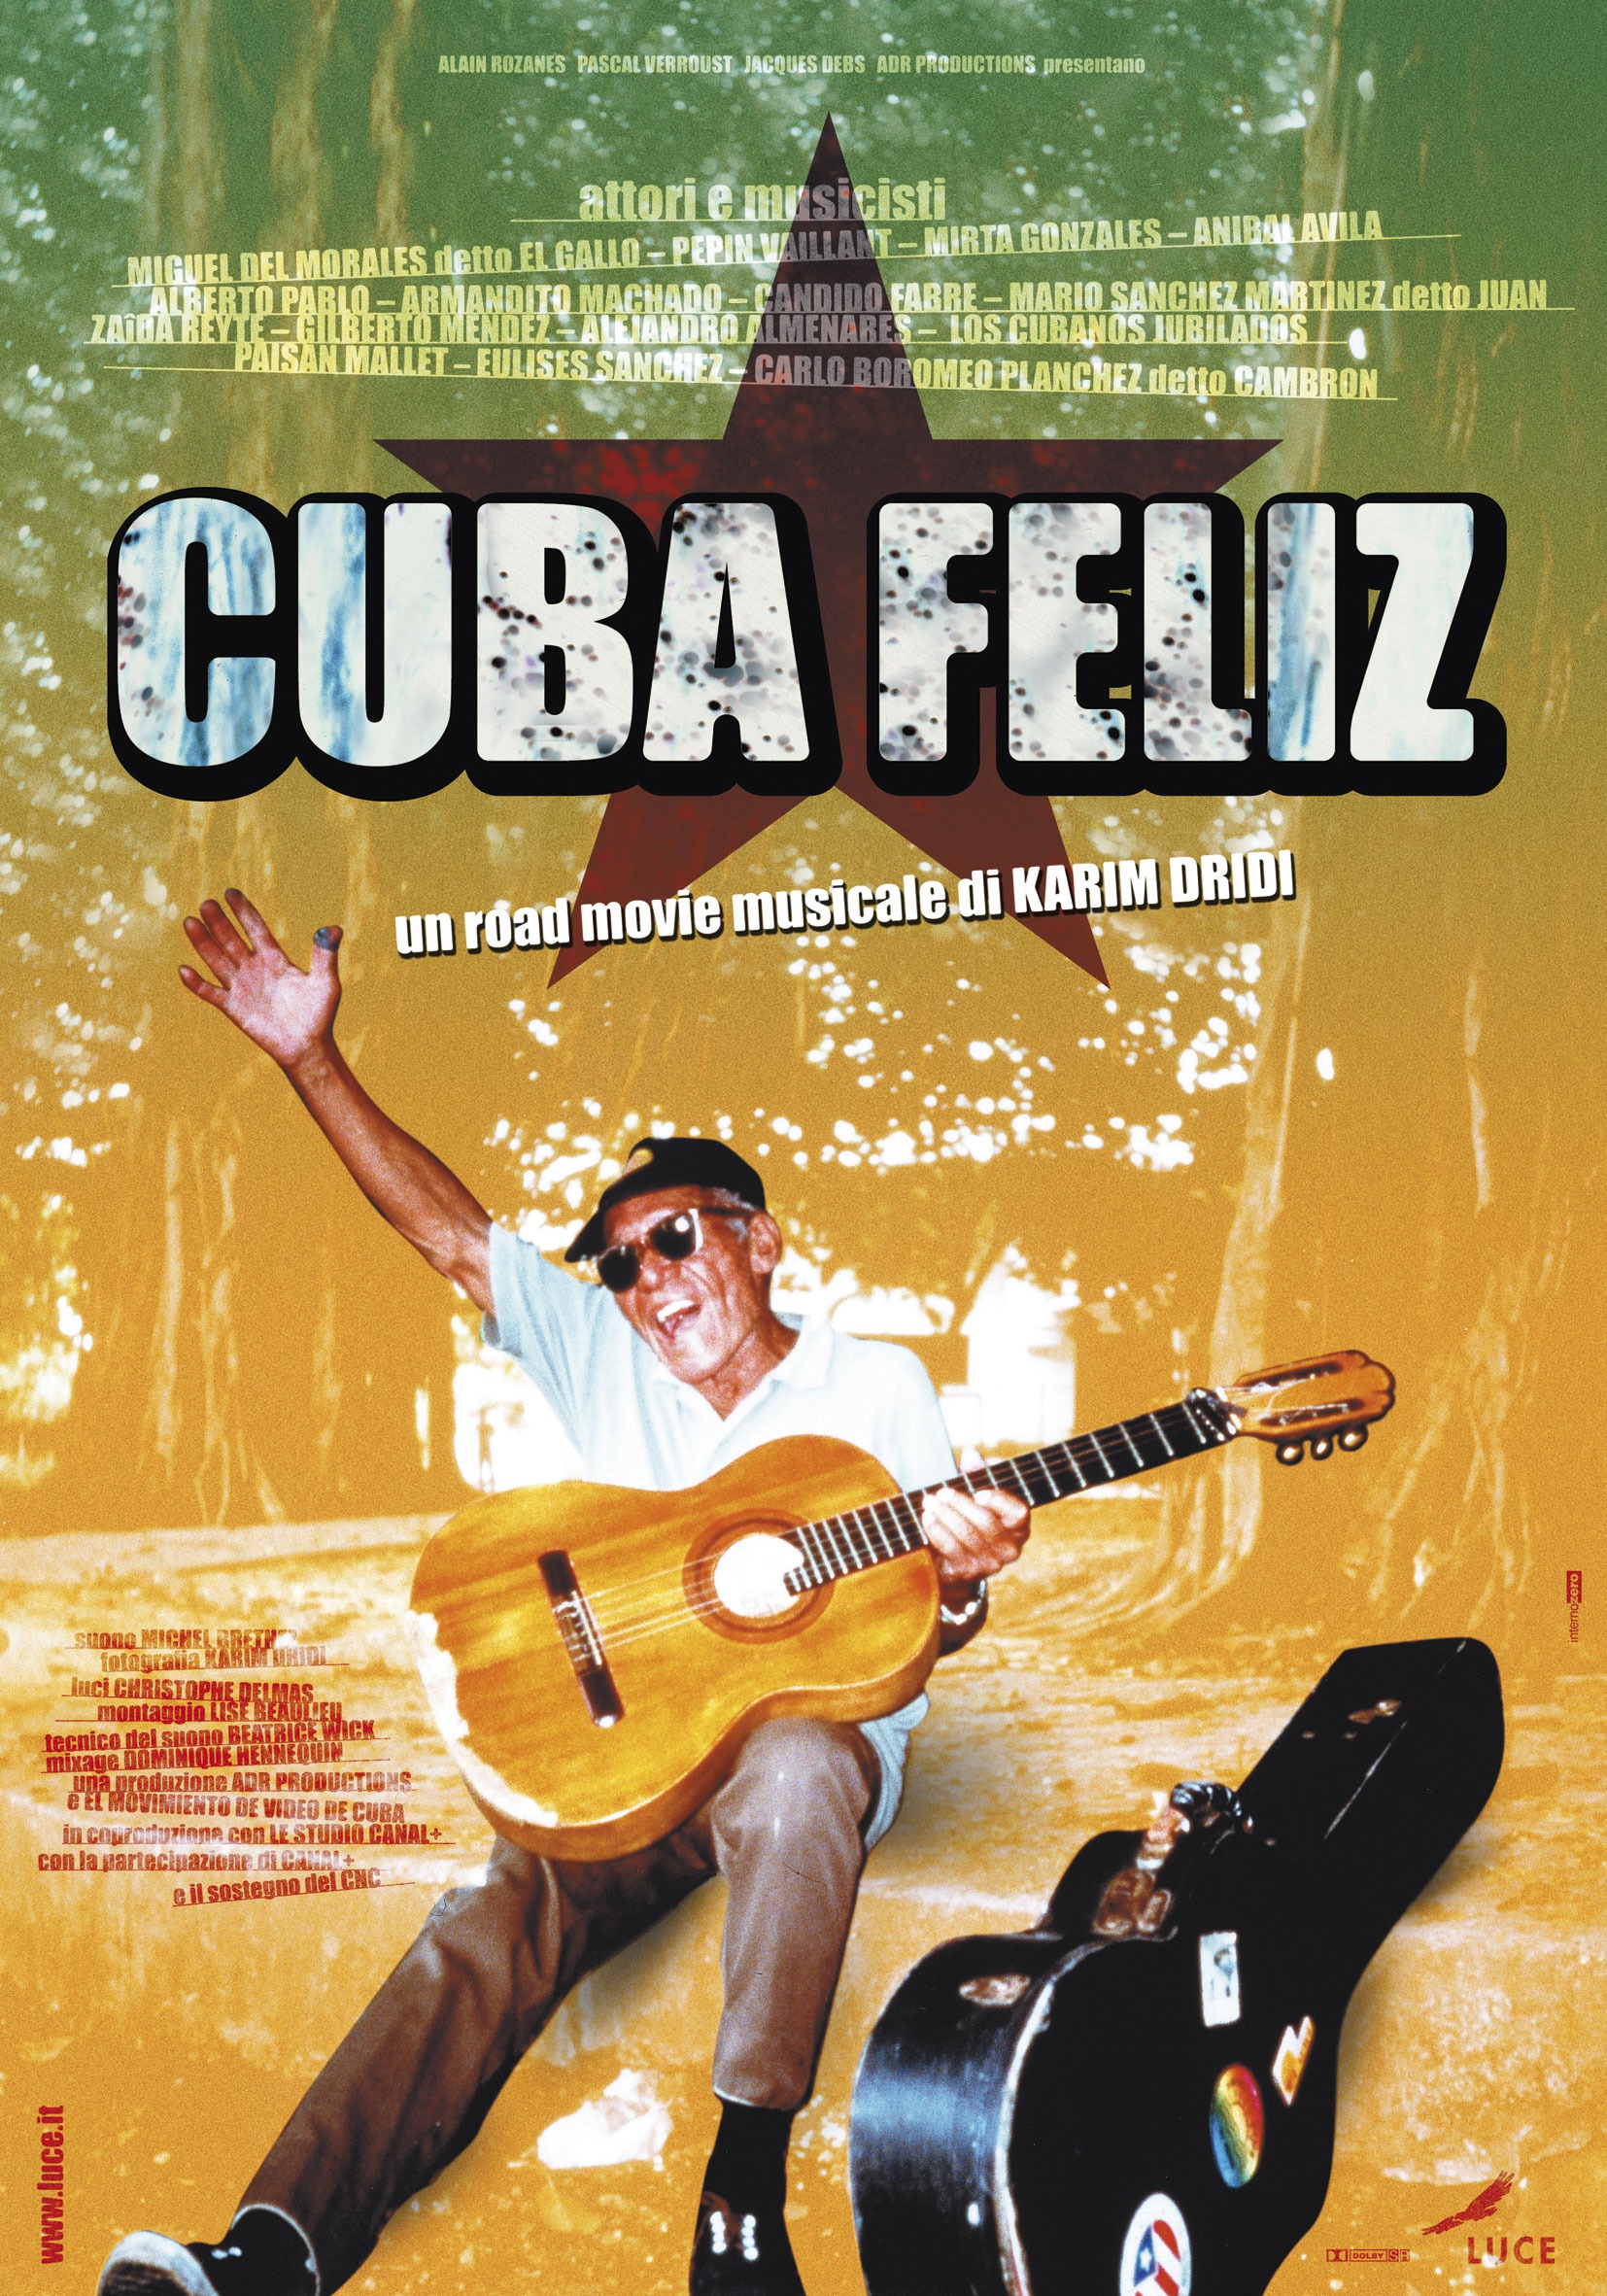 Mega Sized Movie Poster Image for Cuba feliz (#2 of 2)